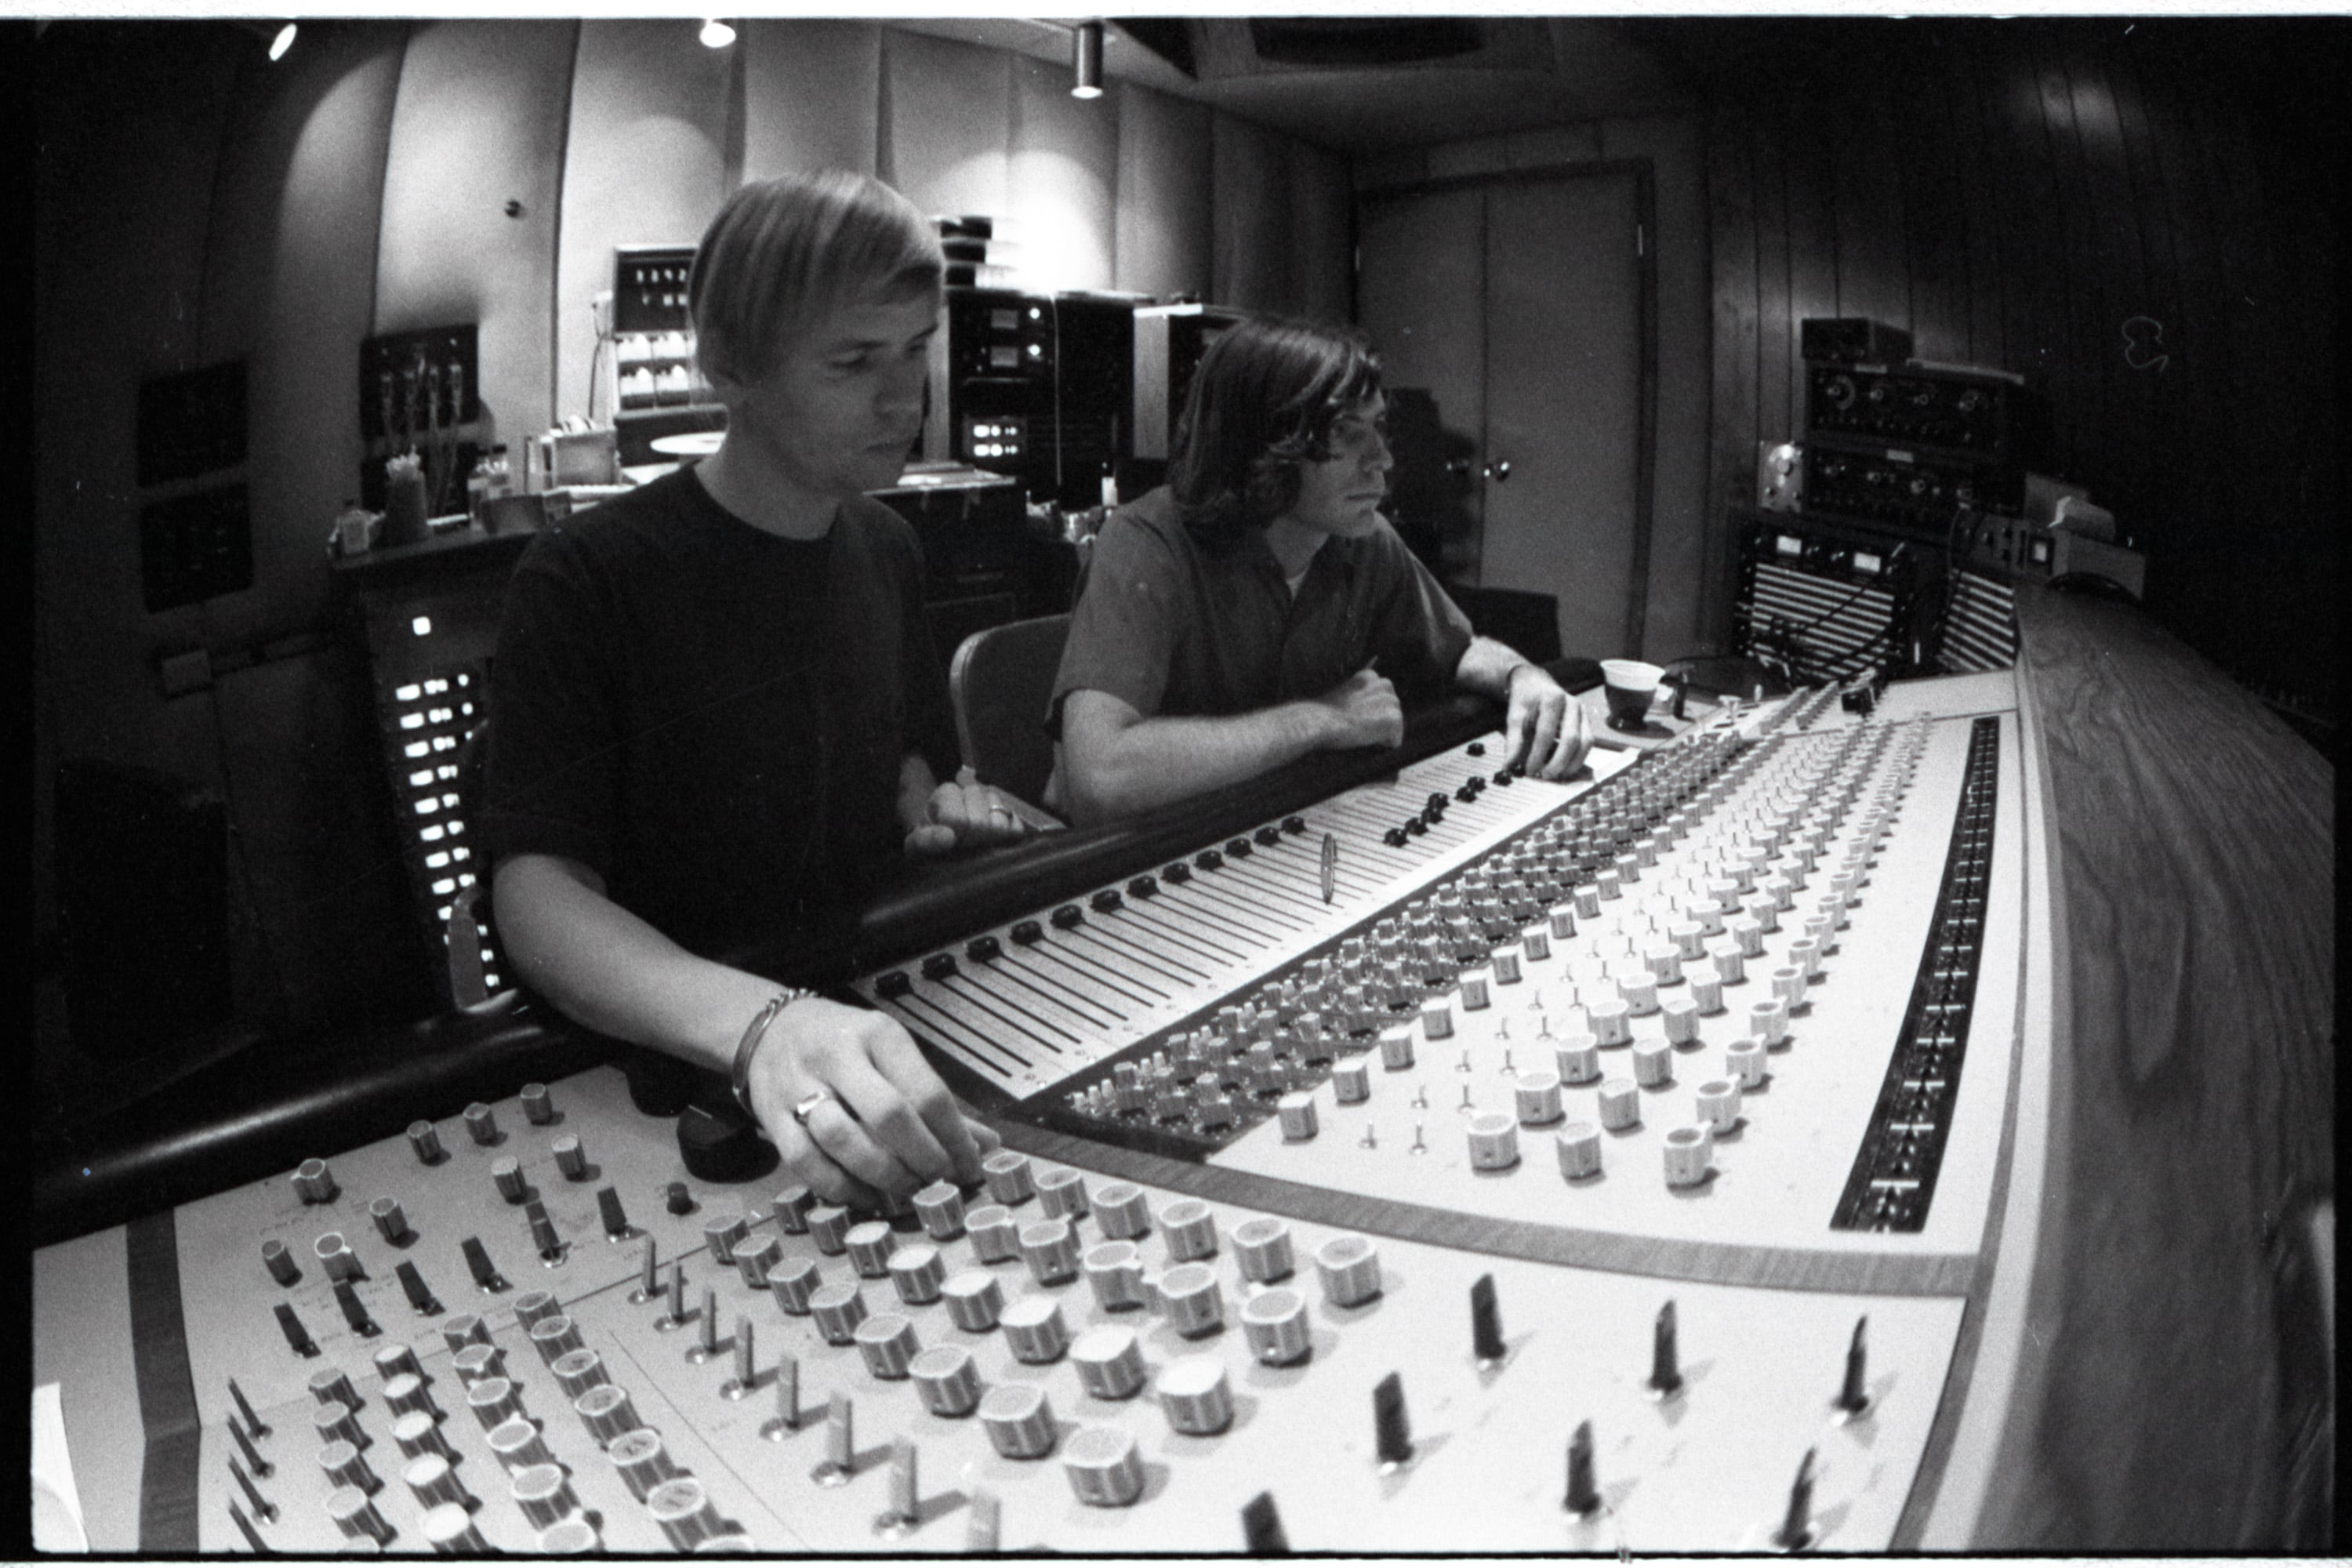 Producer Ted Templeman and Donn Landee at work in Amigo Studios, circa 1972